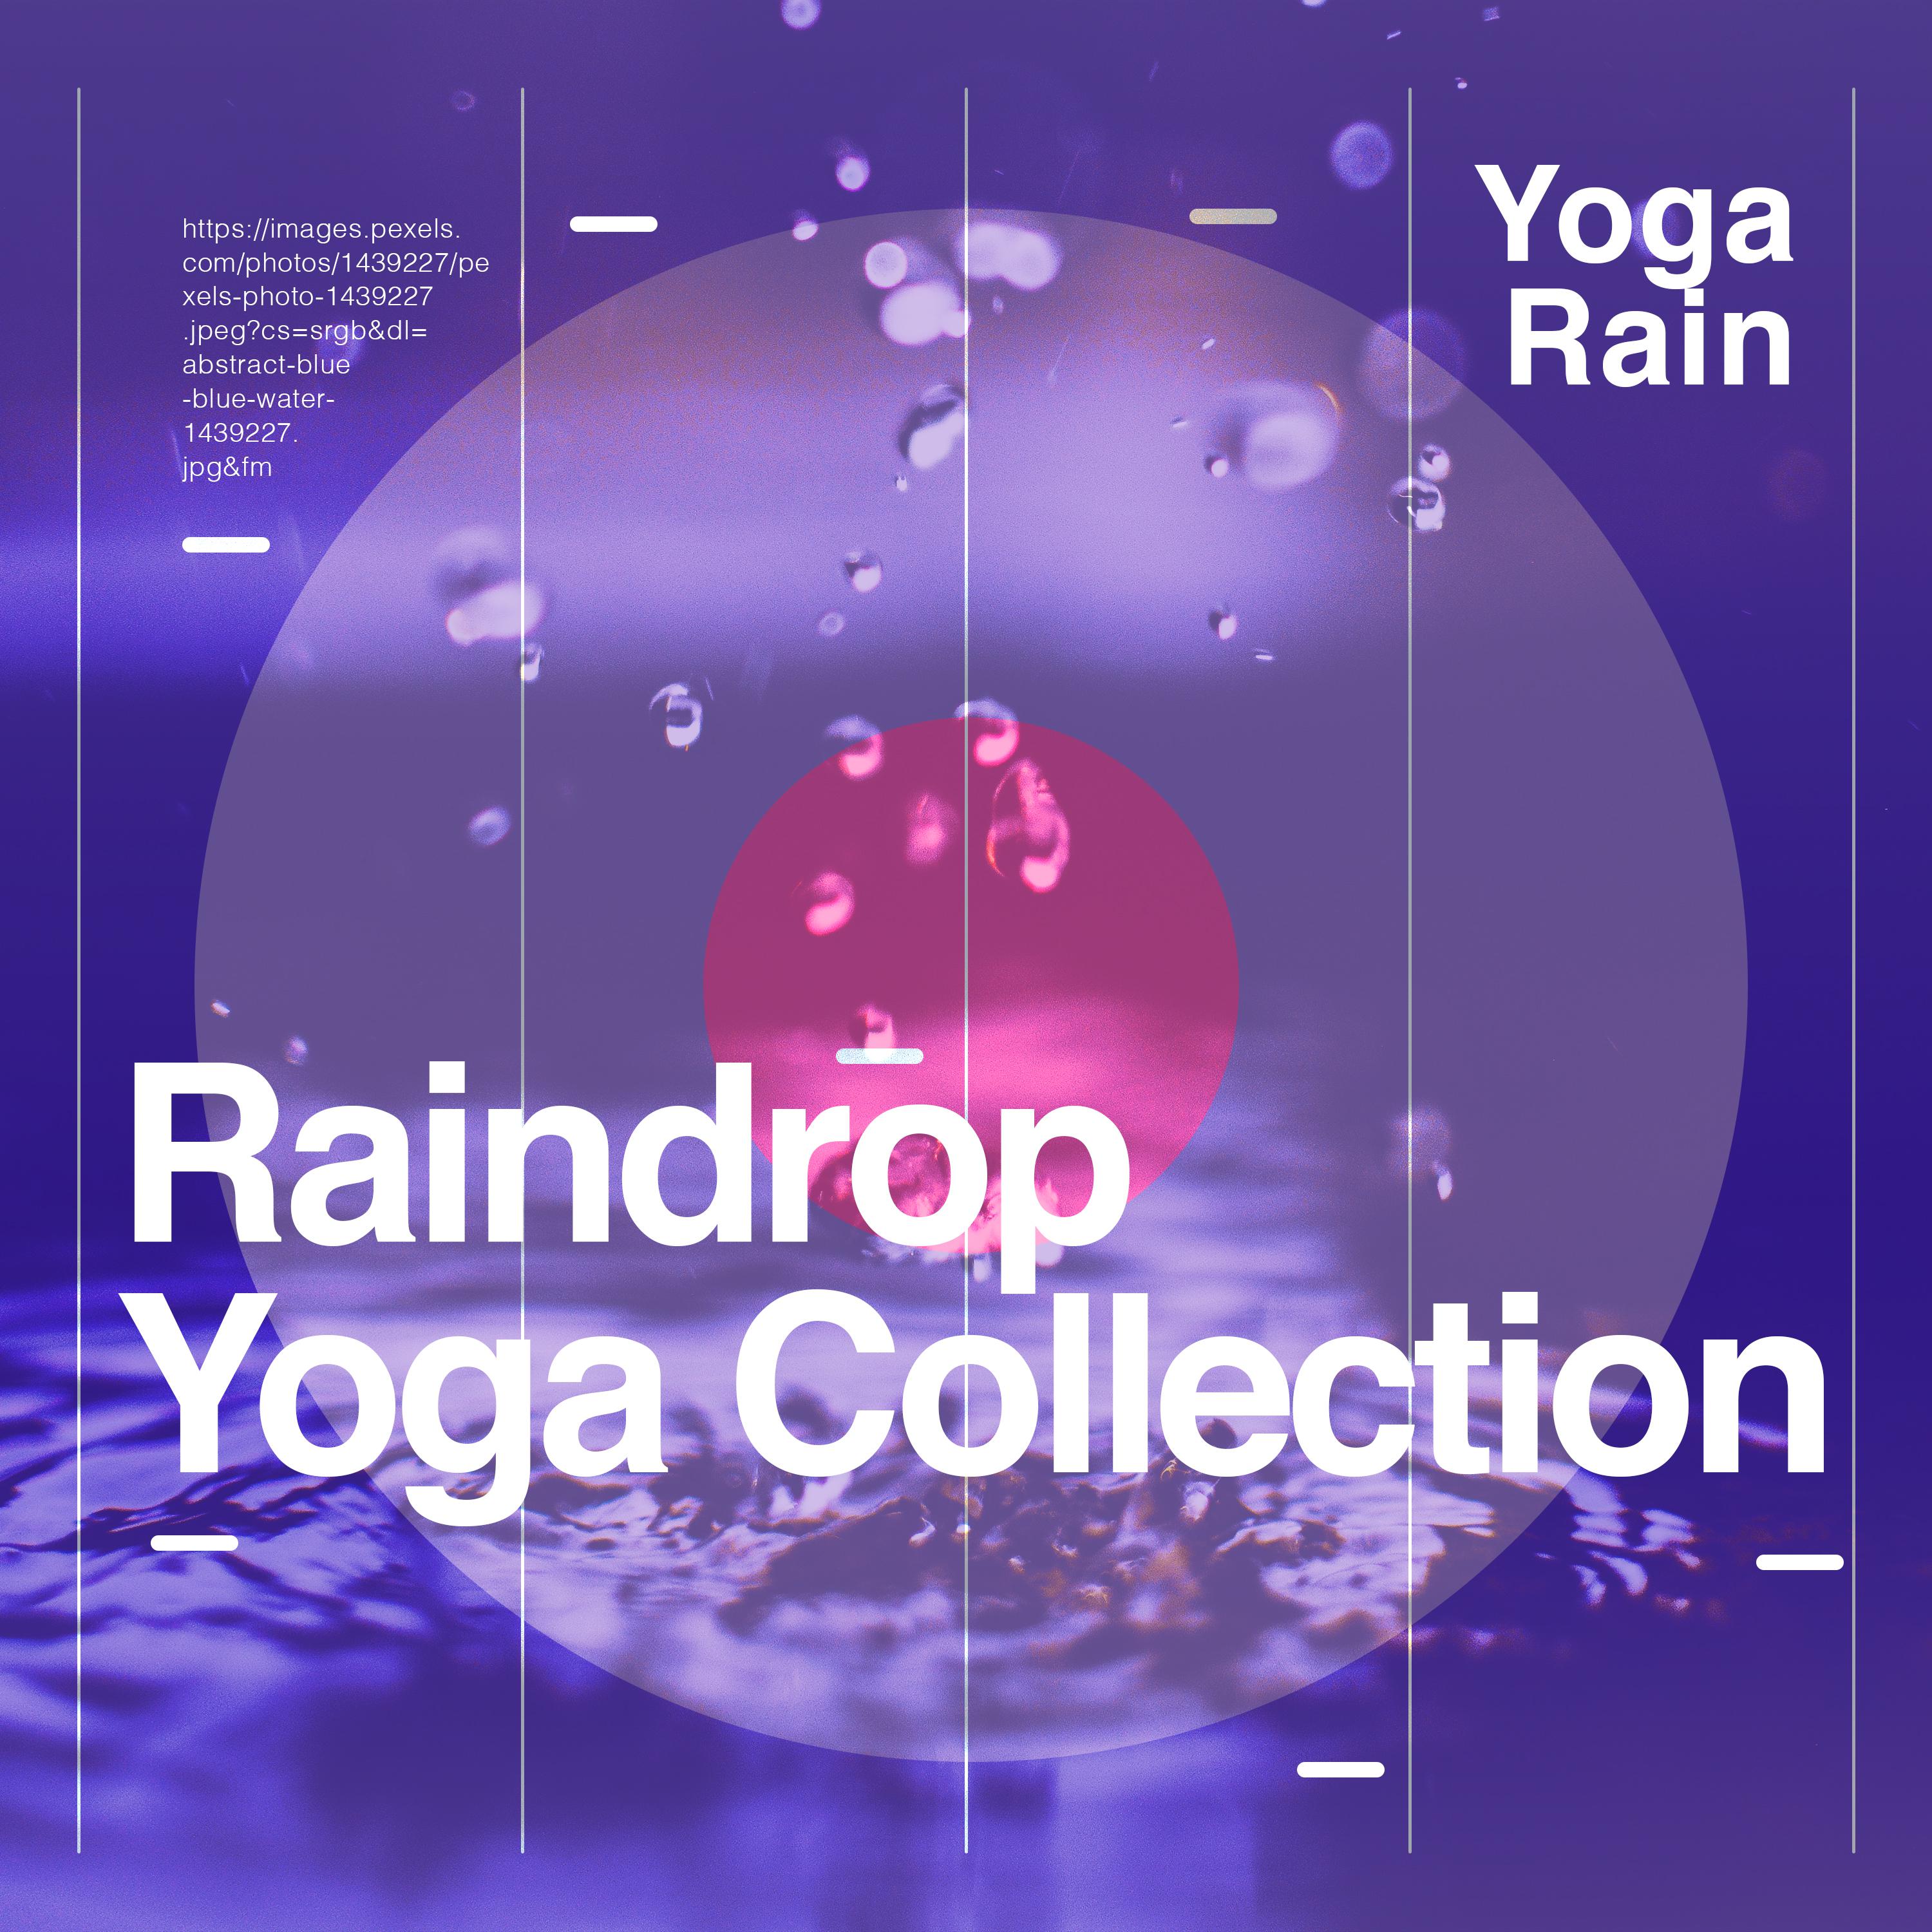 Raindrop Yoga Collection